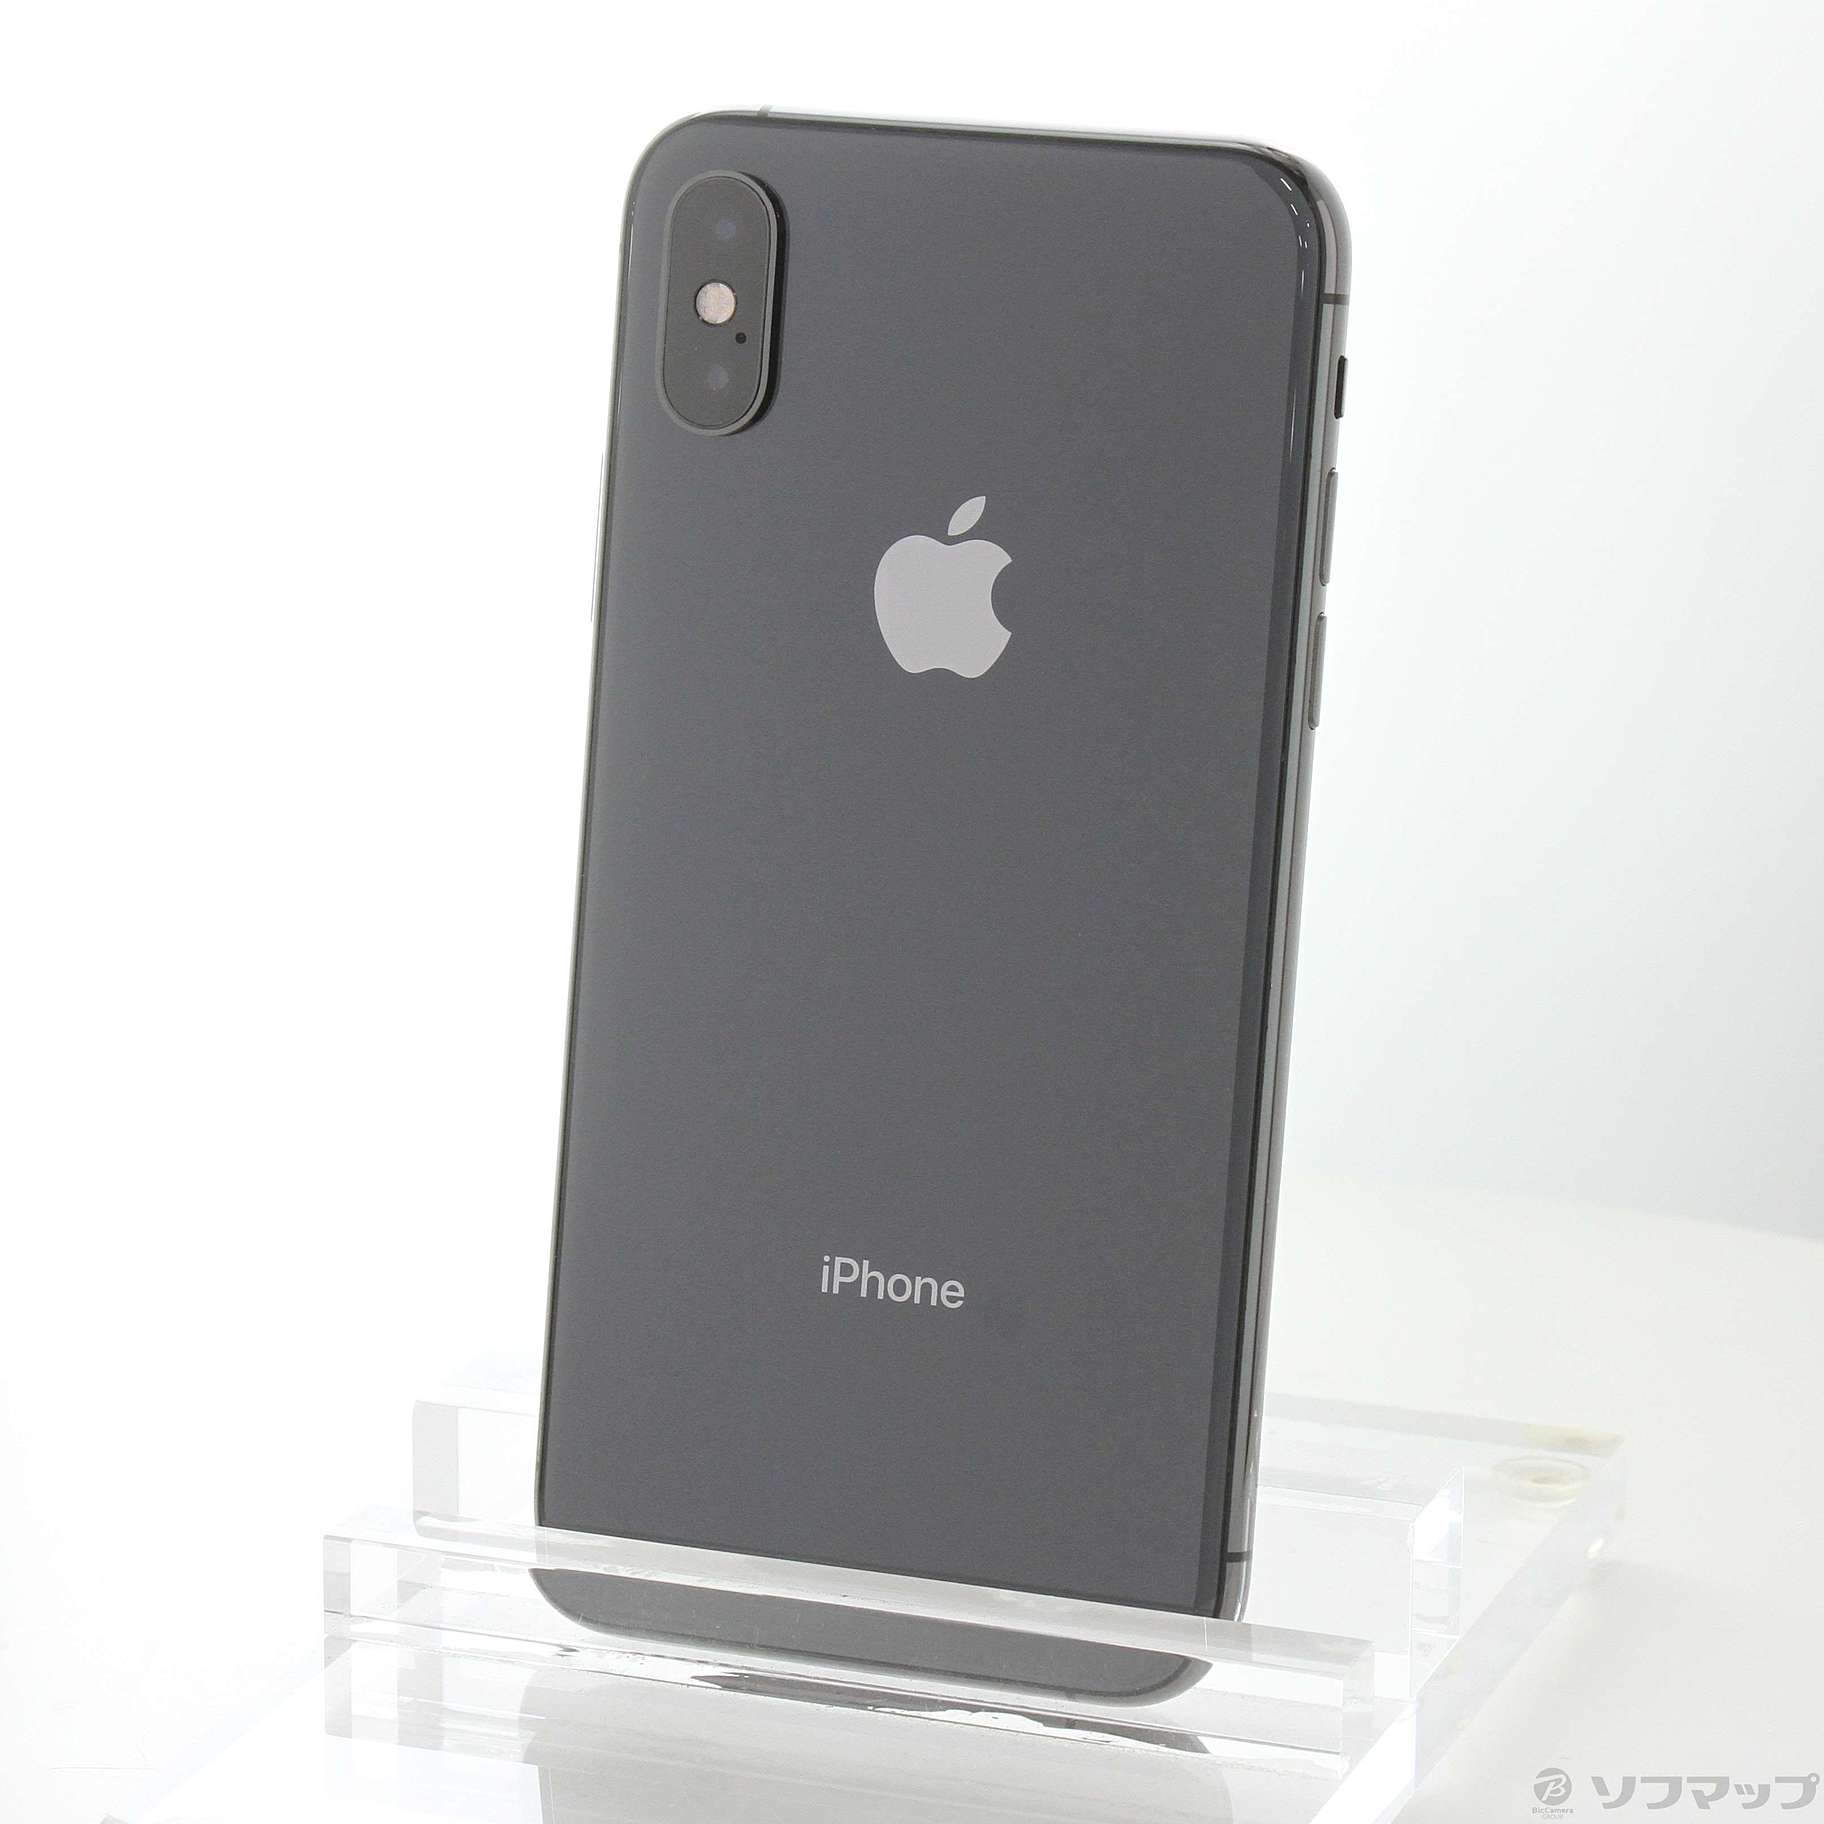 iPhoneXs space gray 64GB